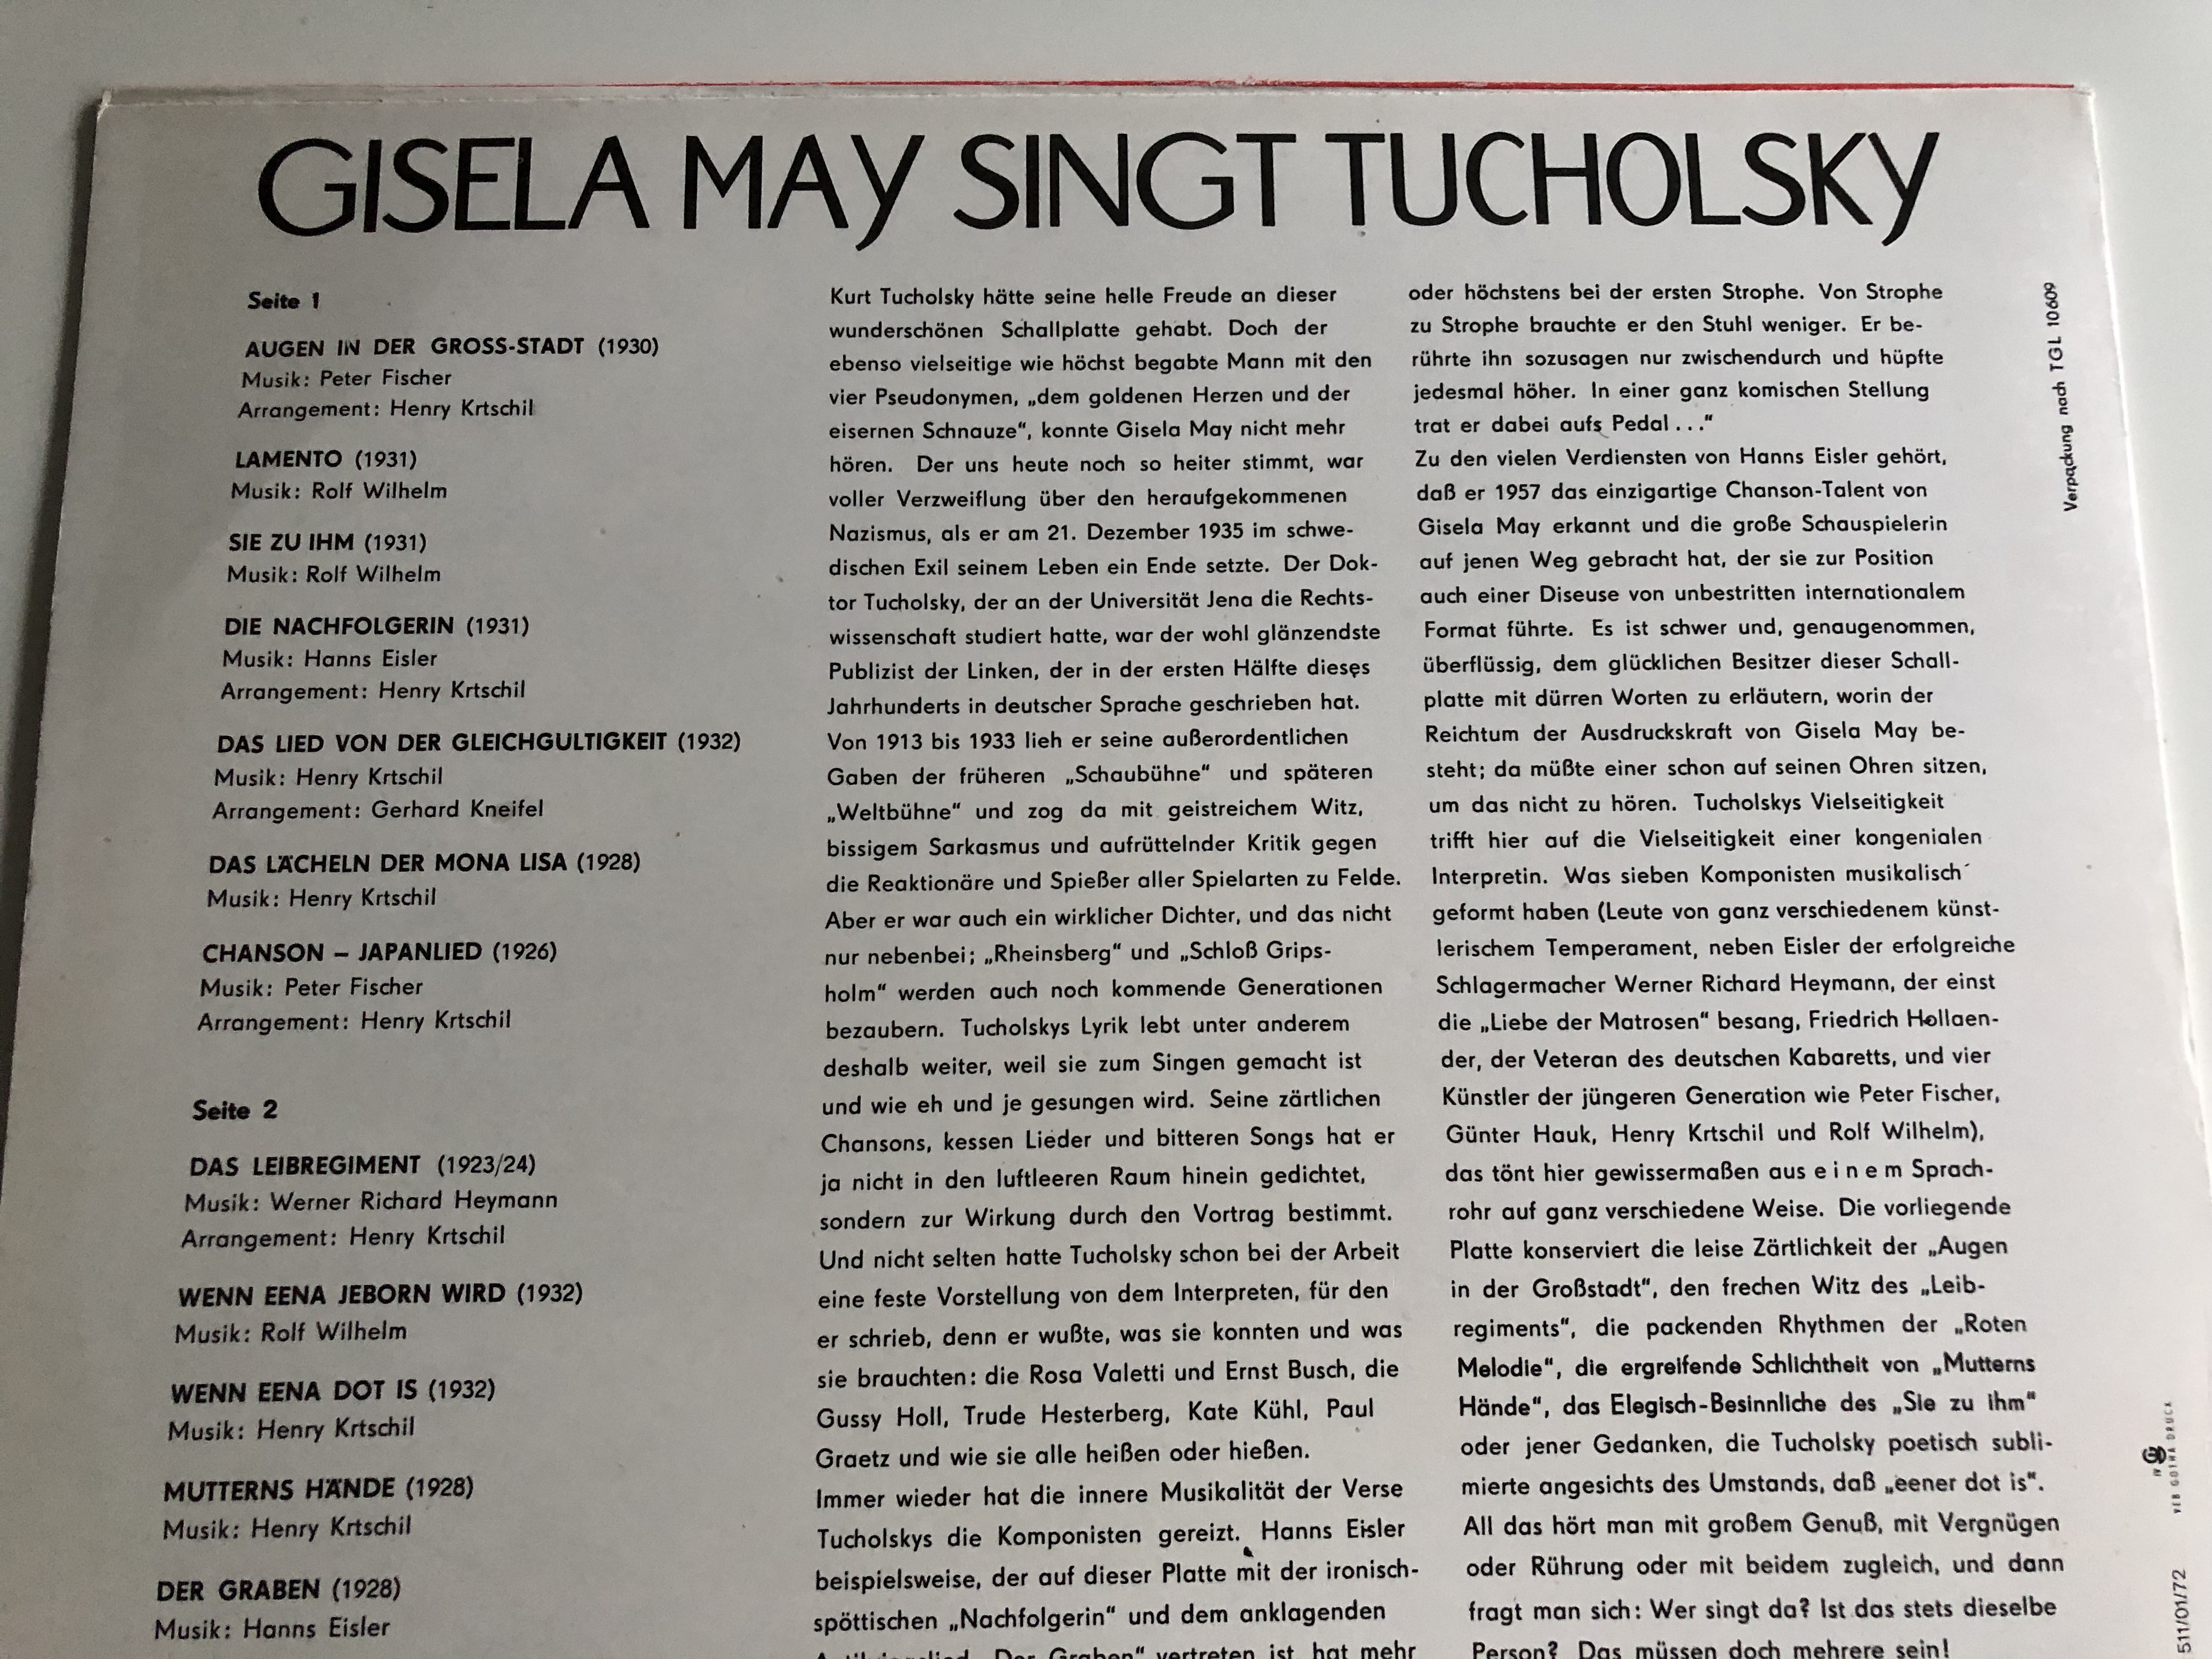 gisela-may-singt-tucholsky-amiga-lp-stereo-8-55-110-3-.jpg